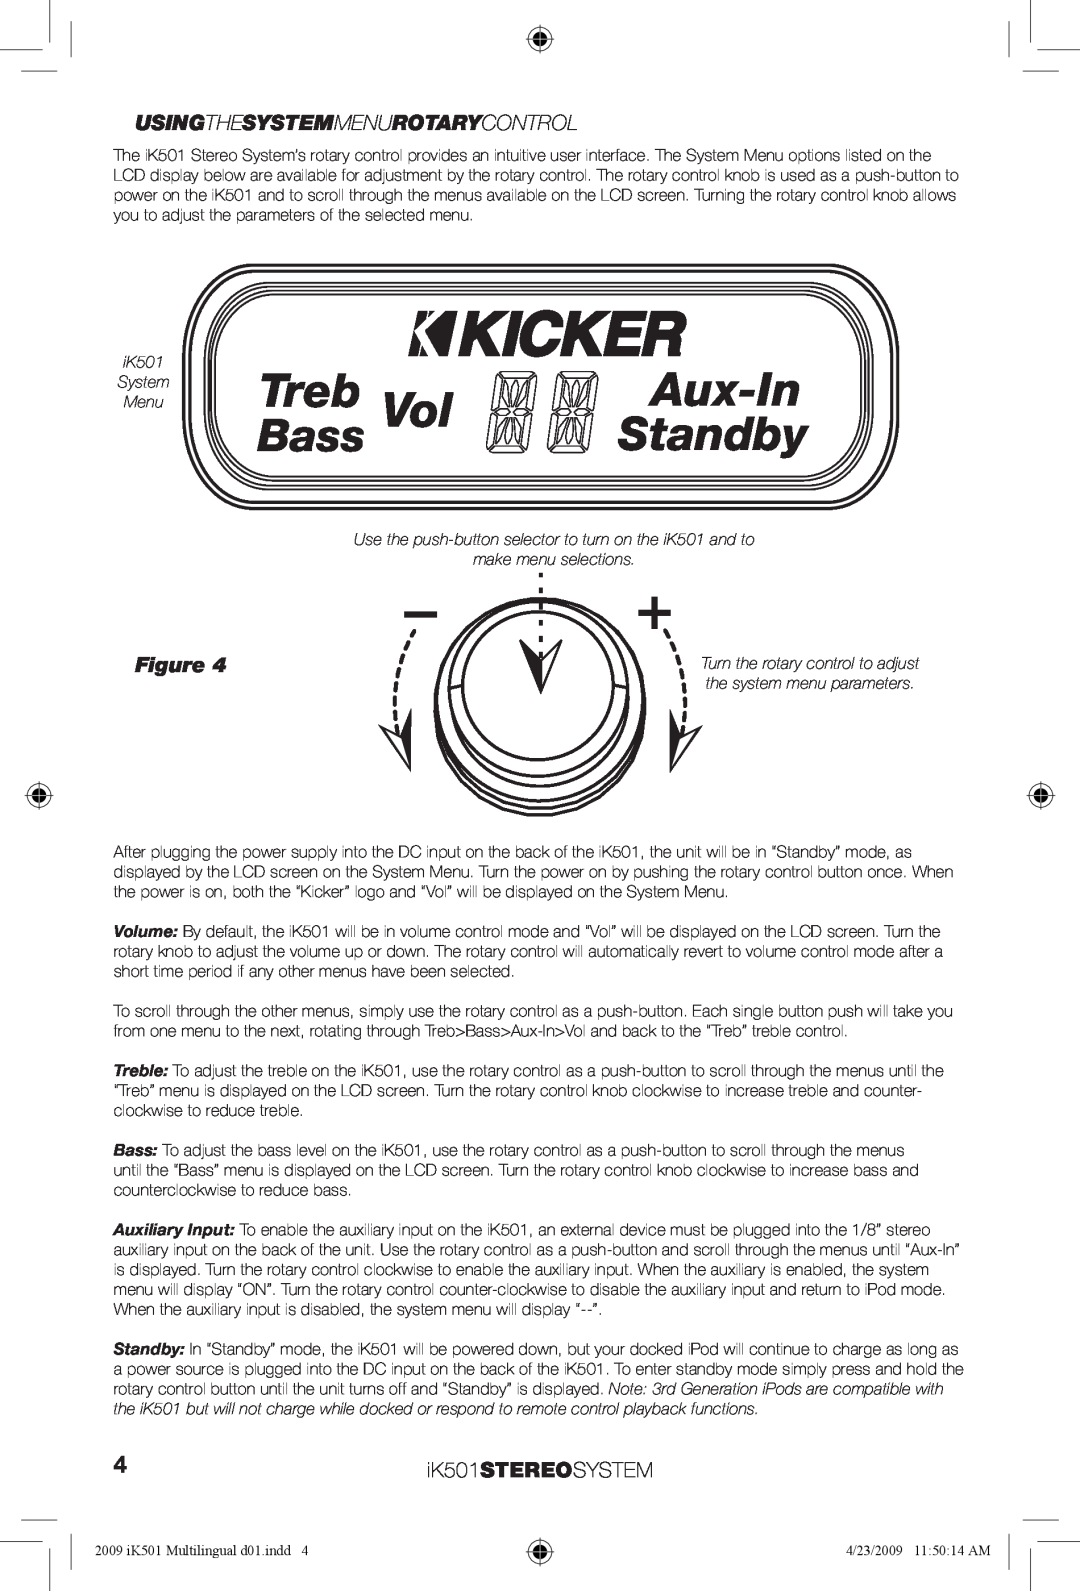 Kicker manual Treb, Aux-In, Standby, Bass, Usingthesystemmenurotarycontrol, iK501STEREOSYSTEM 